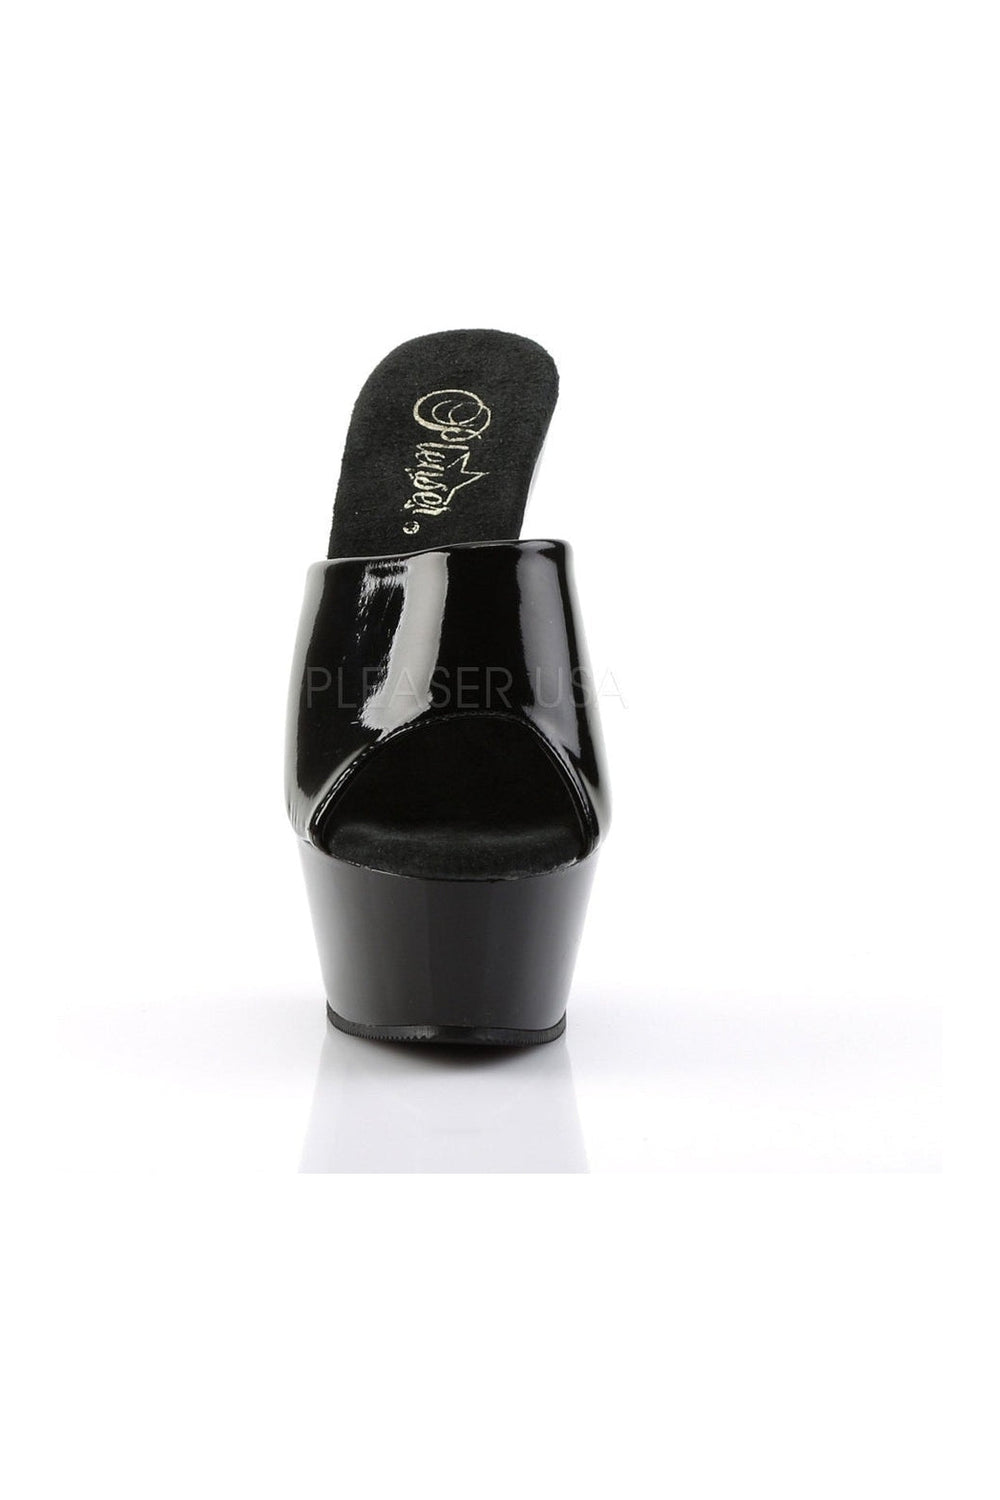 KISS-201 Platform Sandal | Black Patent-Pleaser-Slides-SEXYSHOES.COM